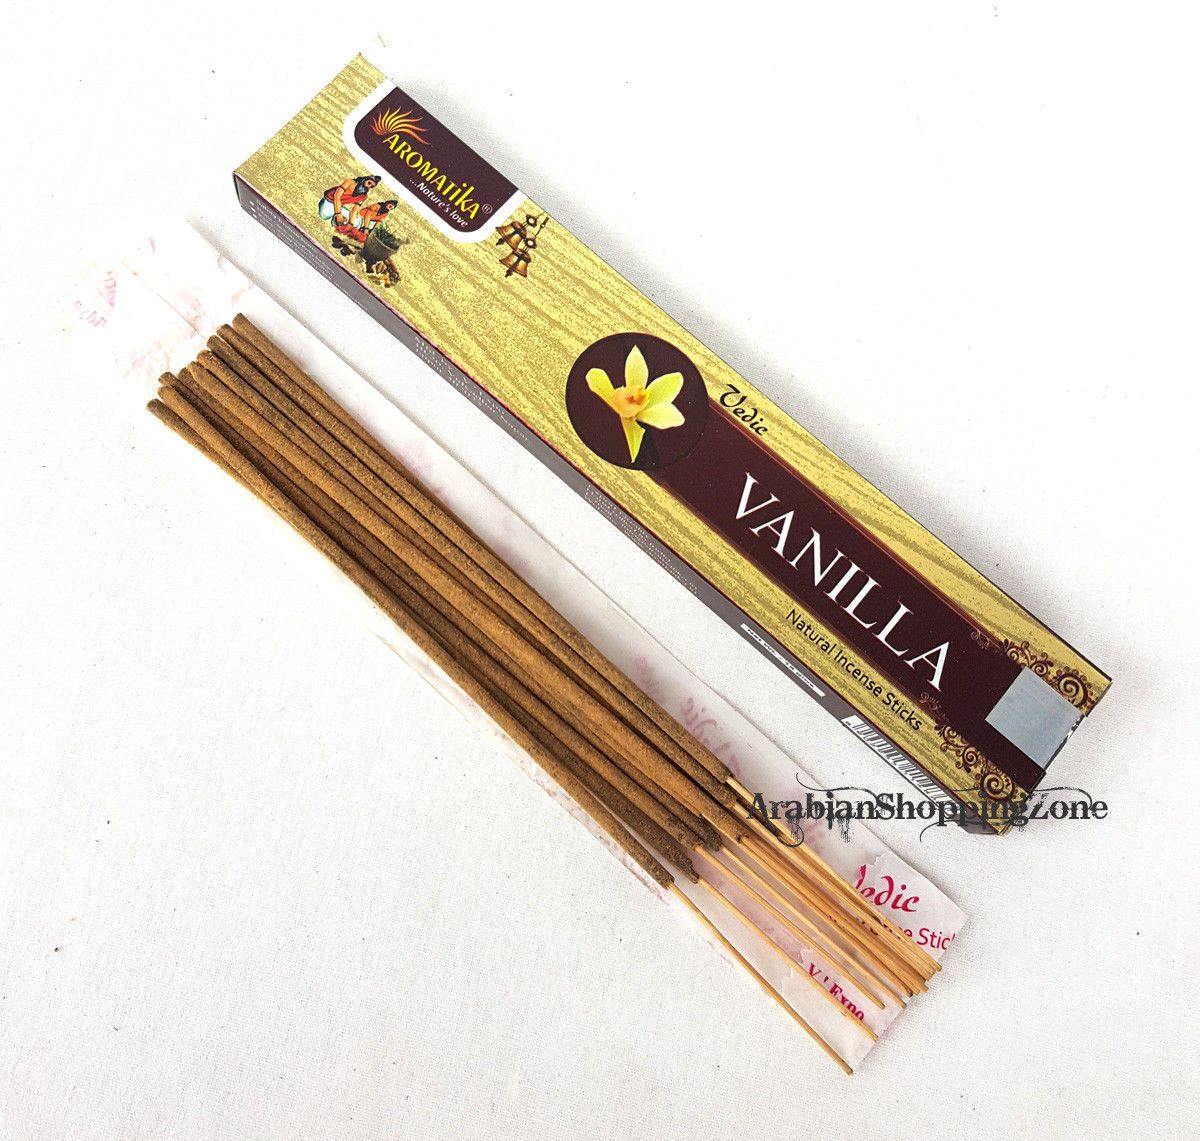 Vedic Aromatika Natural Incense Sticks 8" - 12 sticks  Encens - Arabian Shopping Zone